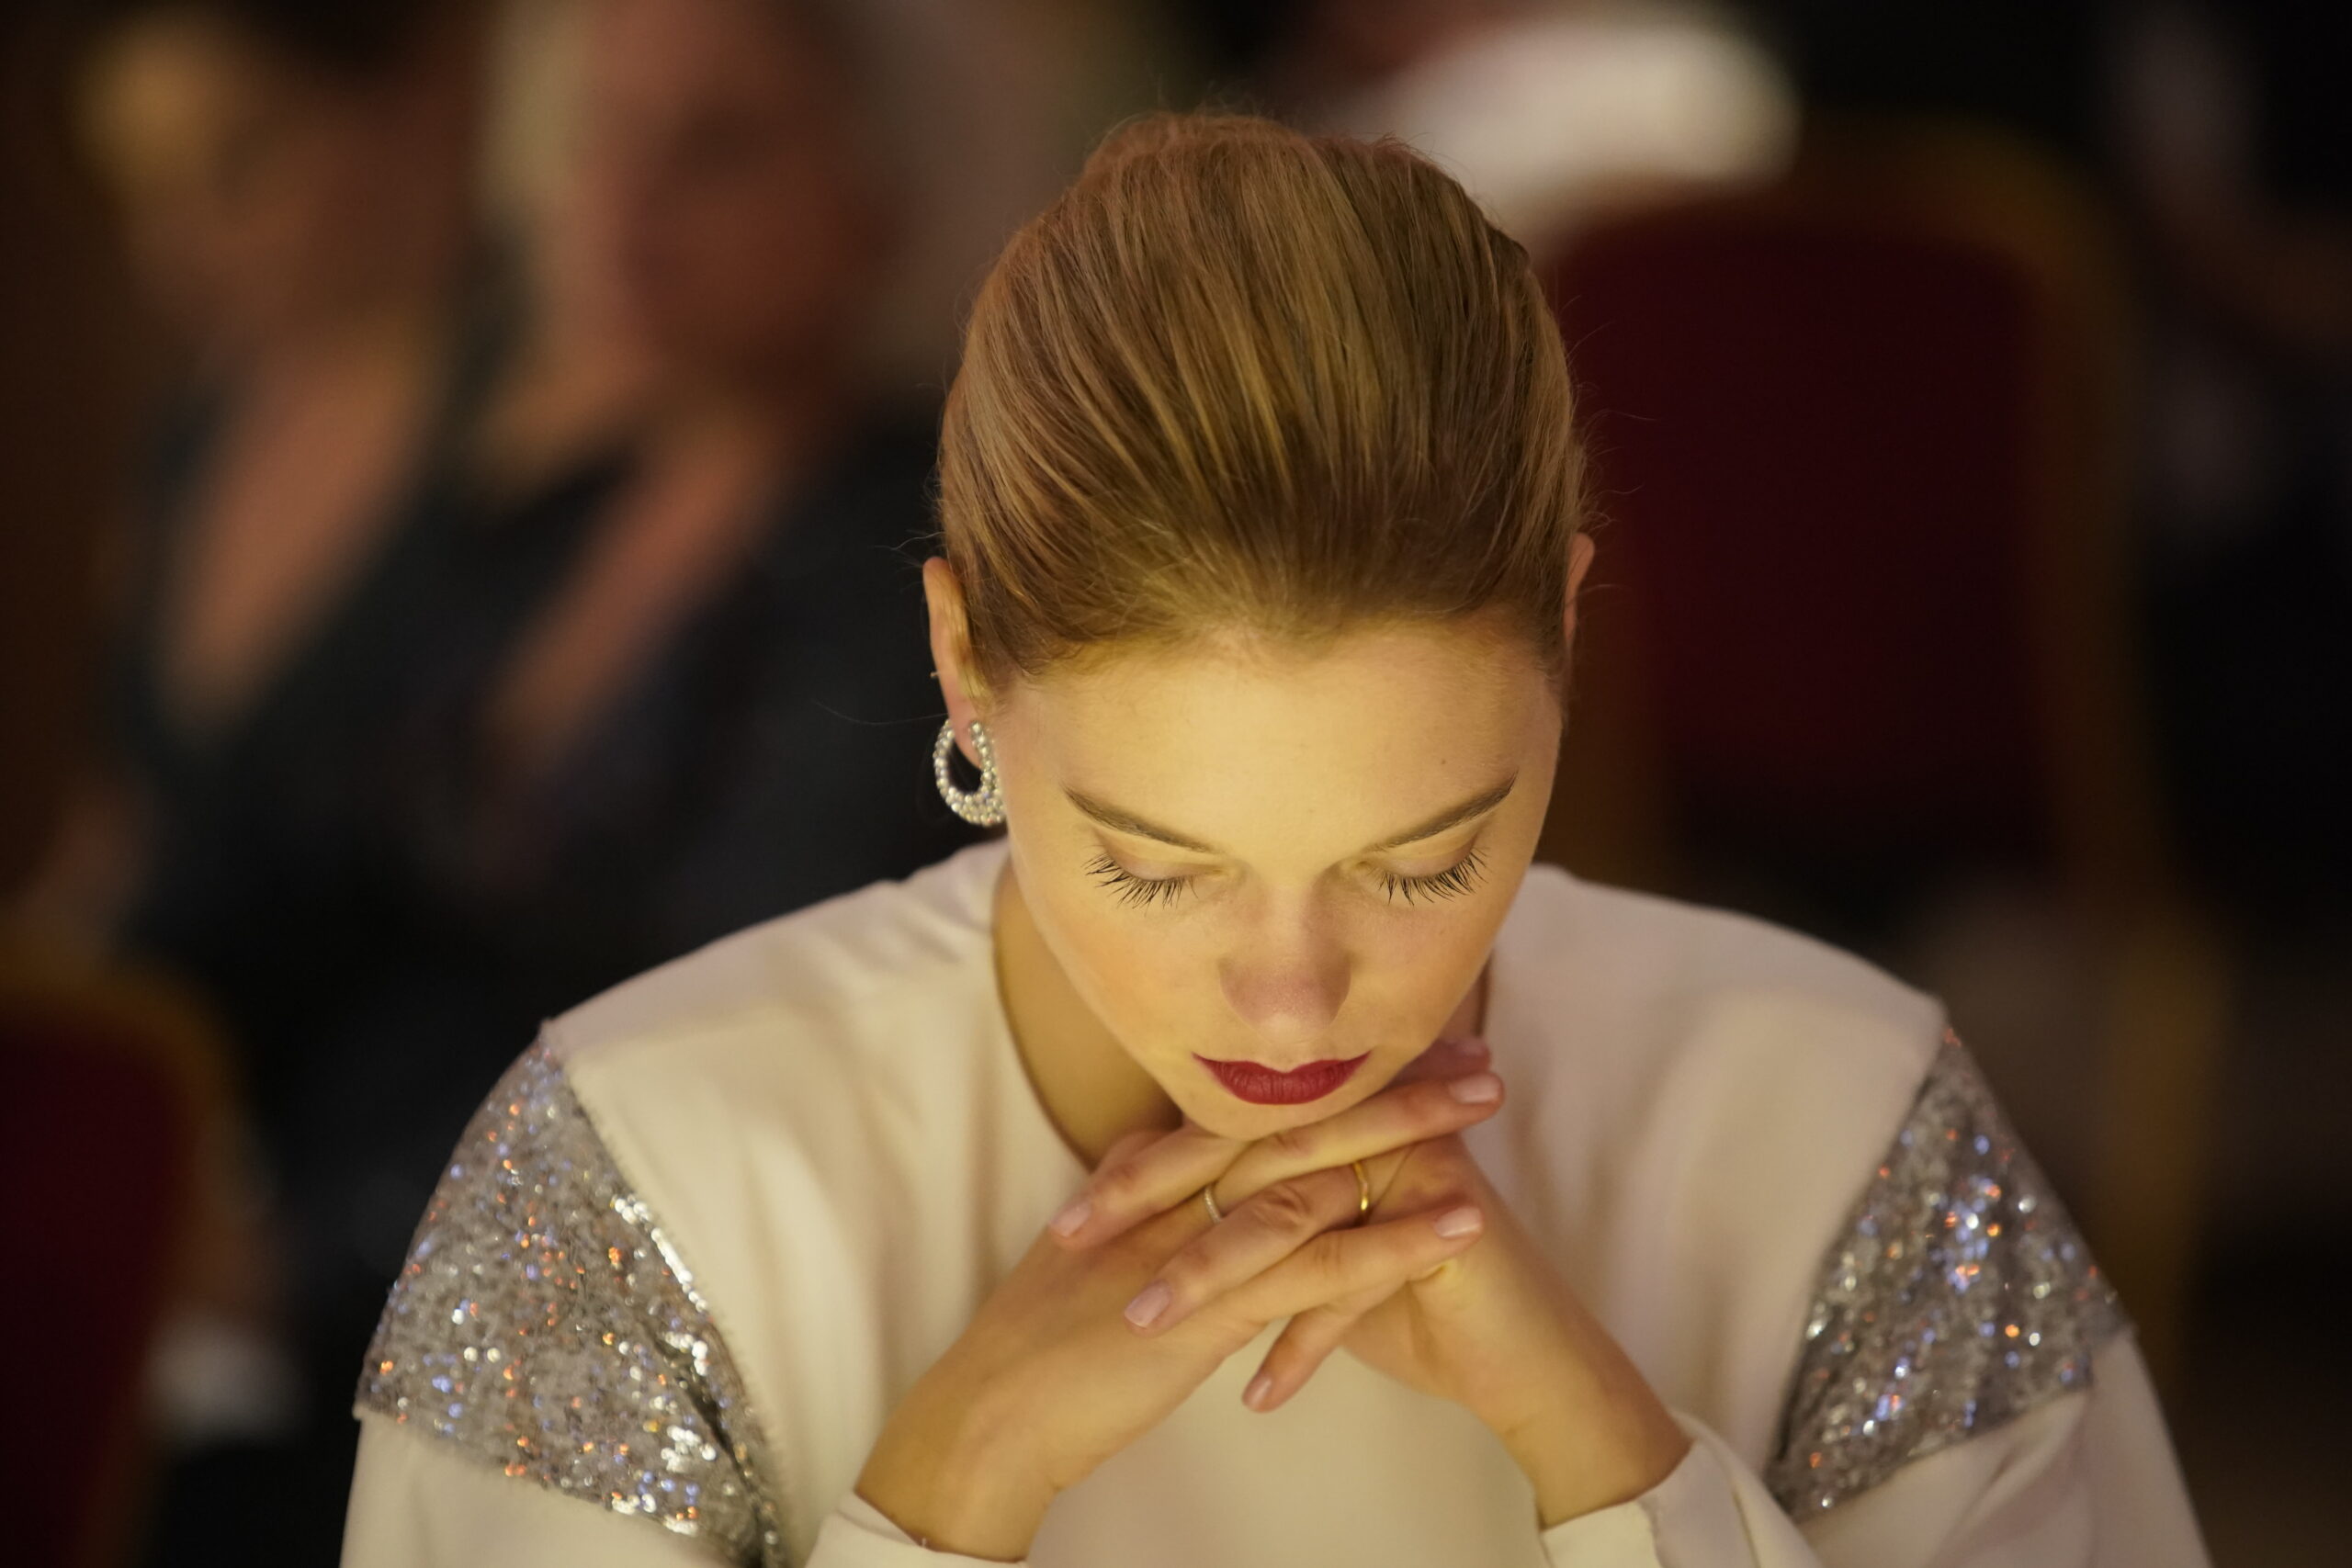 FRANCE Trailer (2021) Léa Seydoux, Drama Movie 